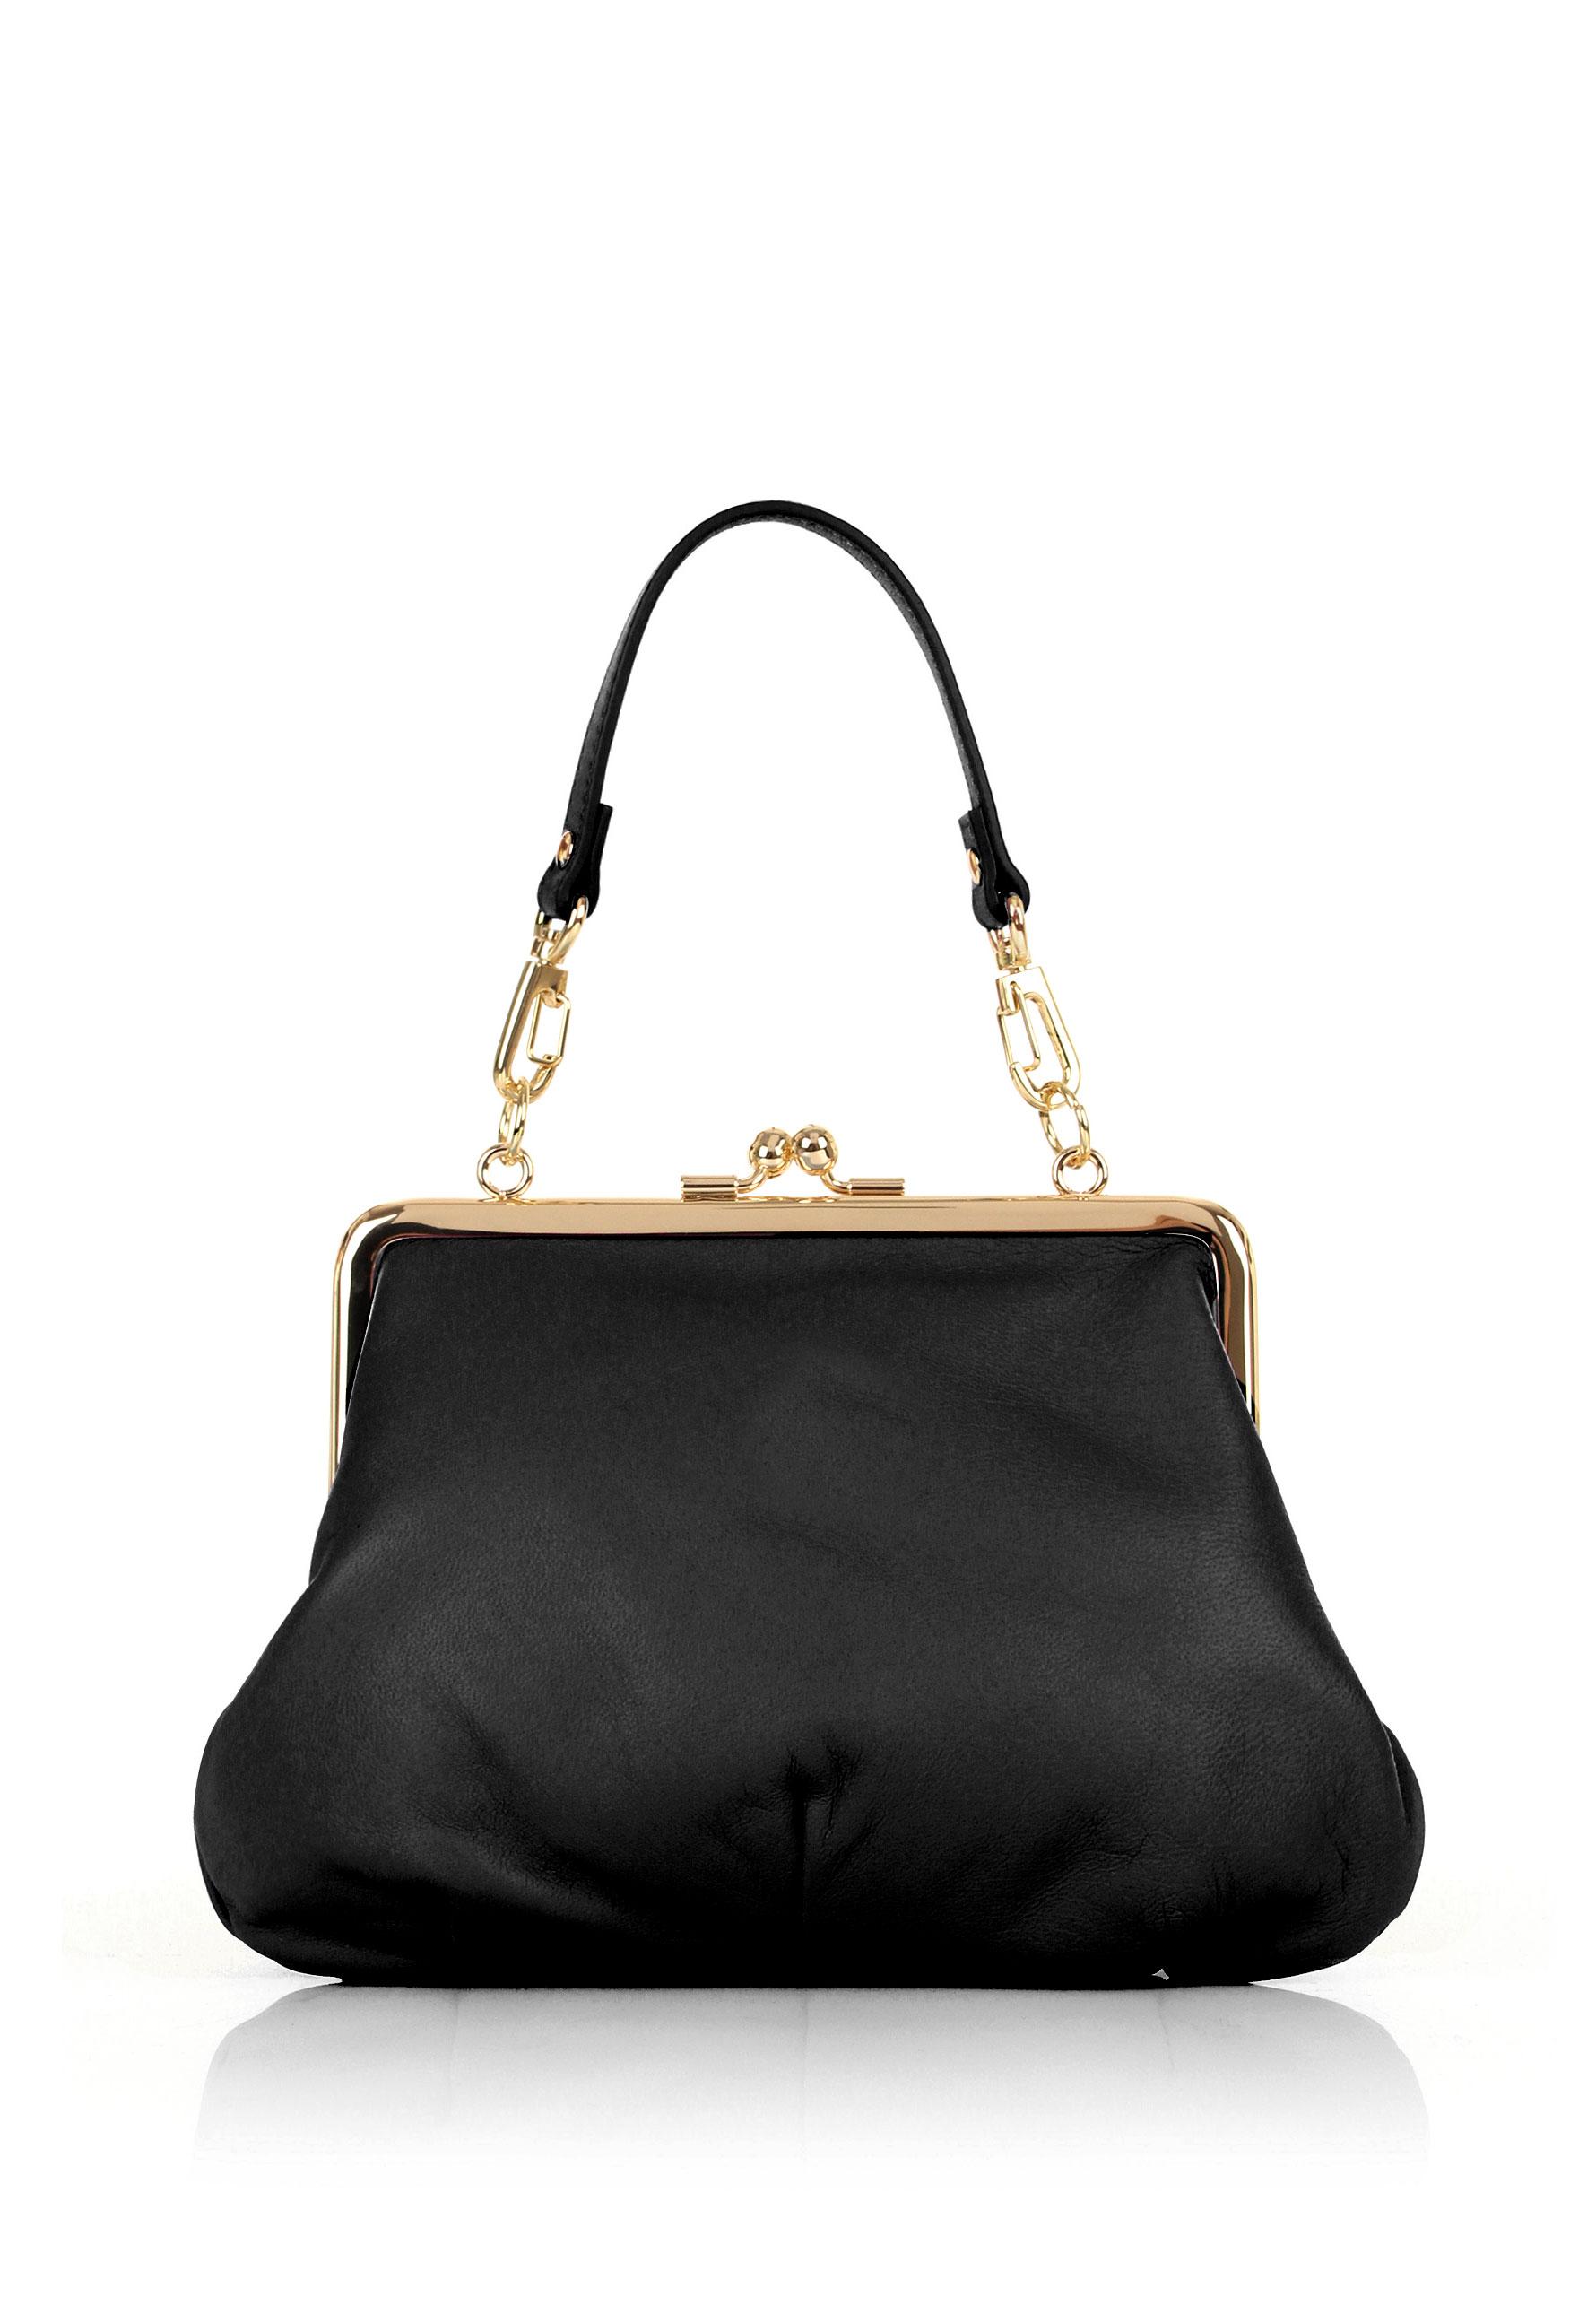 Lyst - Vivienne Westwood Nappa 3655 Evening Bag Black in Black